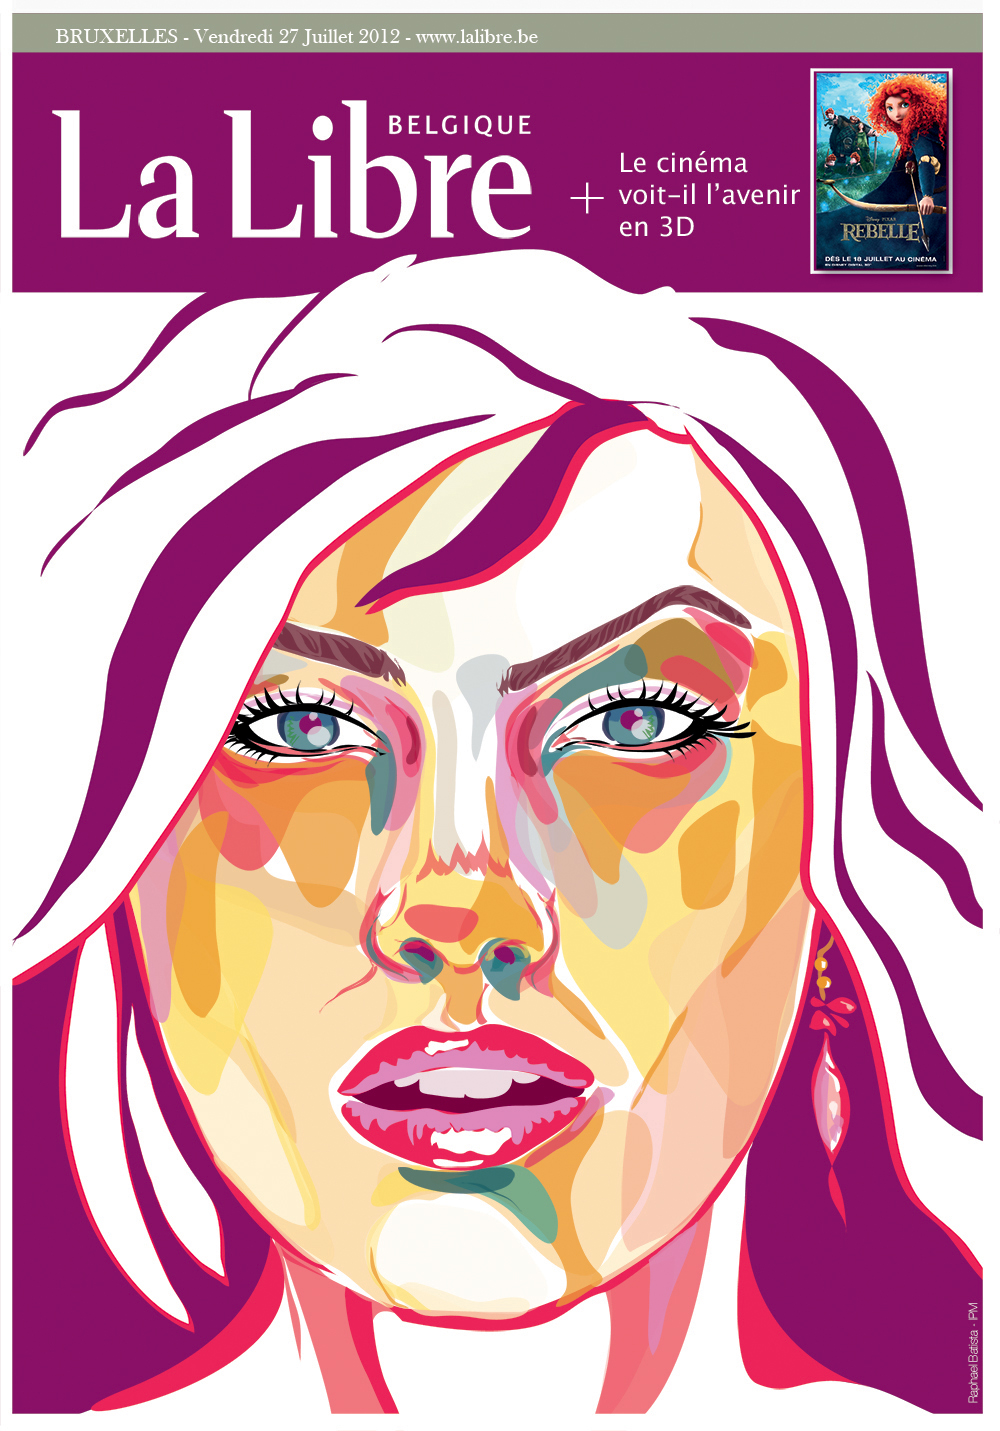 Lalibre.be  Graphic design print Illustrator photoshop bruxelles belgique belgium